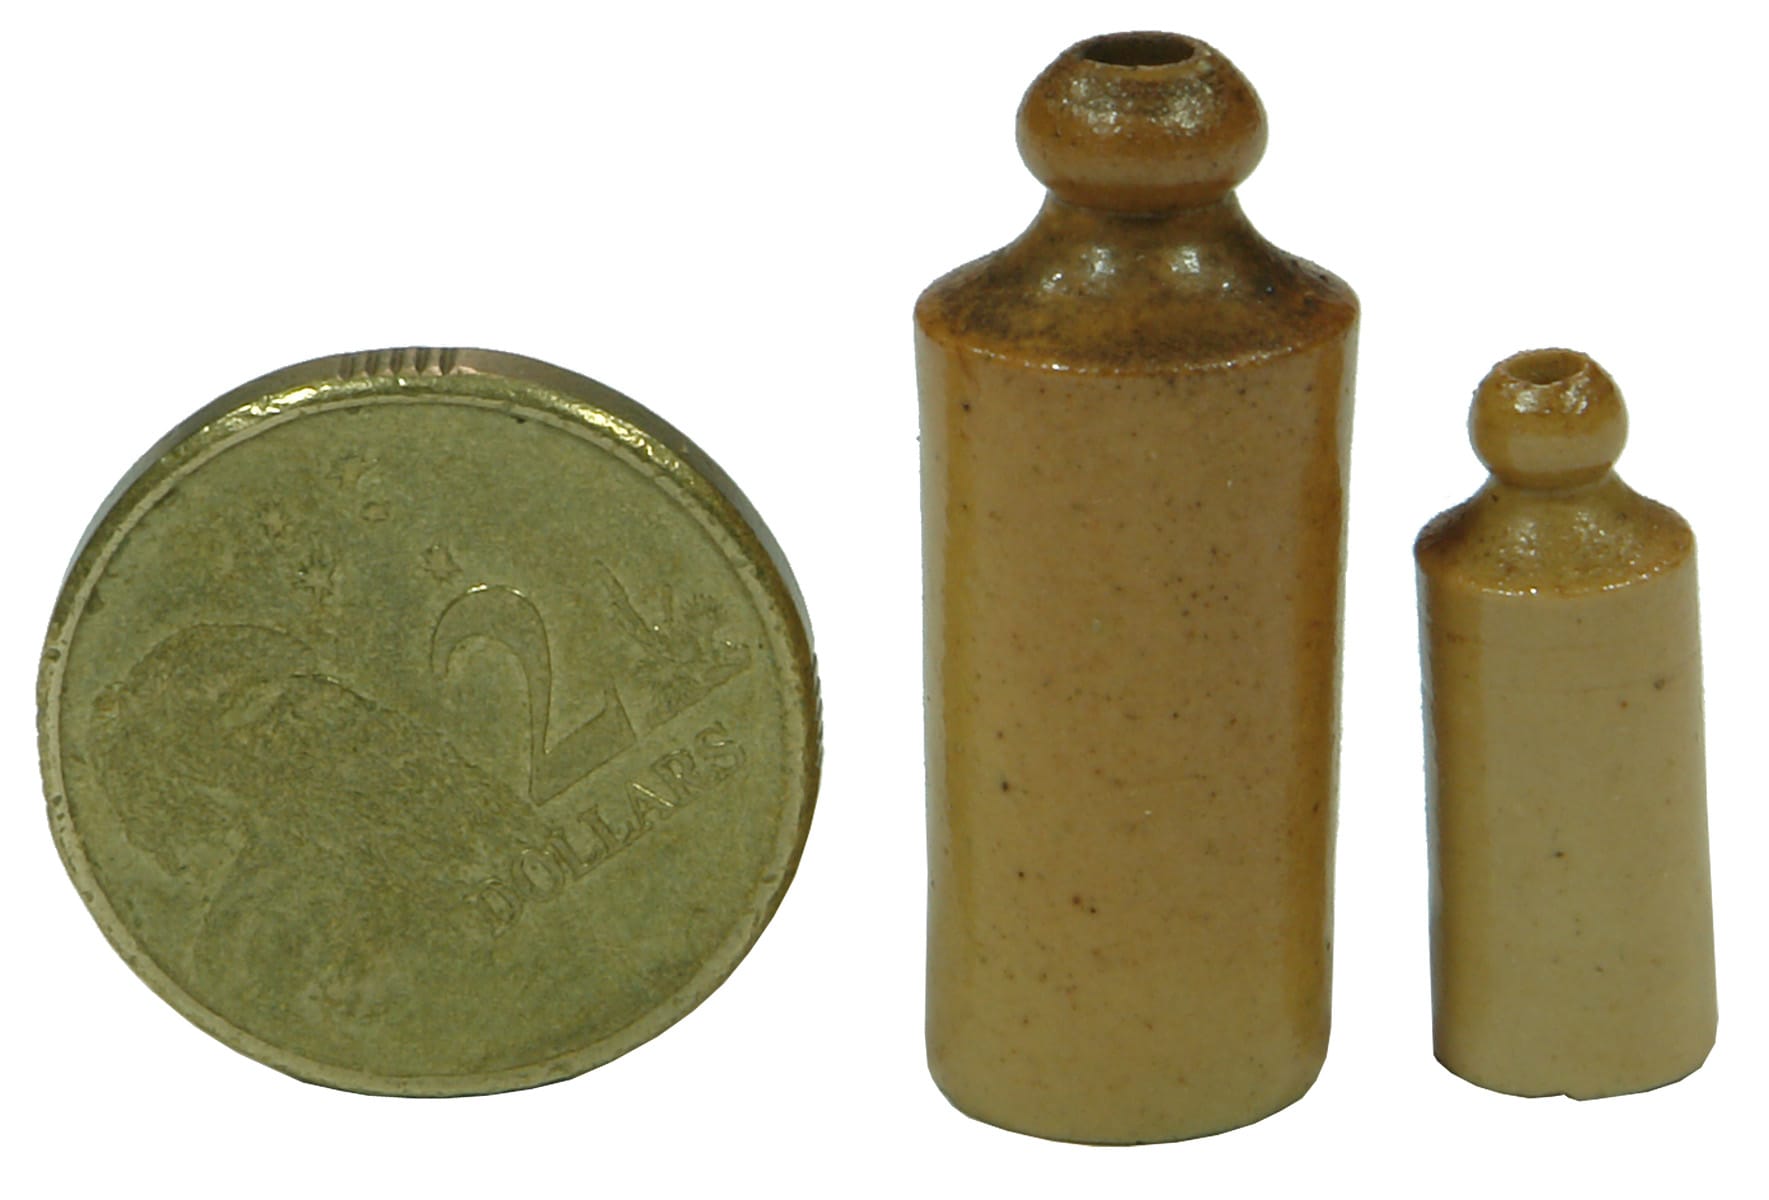 Sample Miniature Stoneware Ginger Beer Bottle